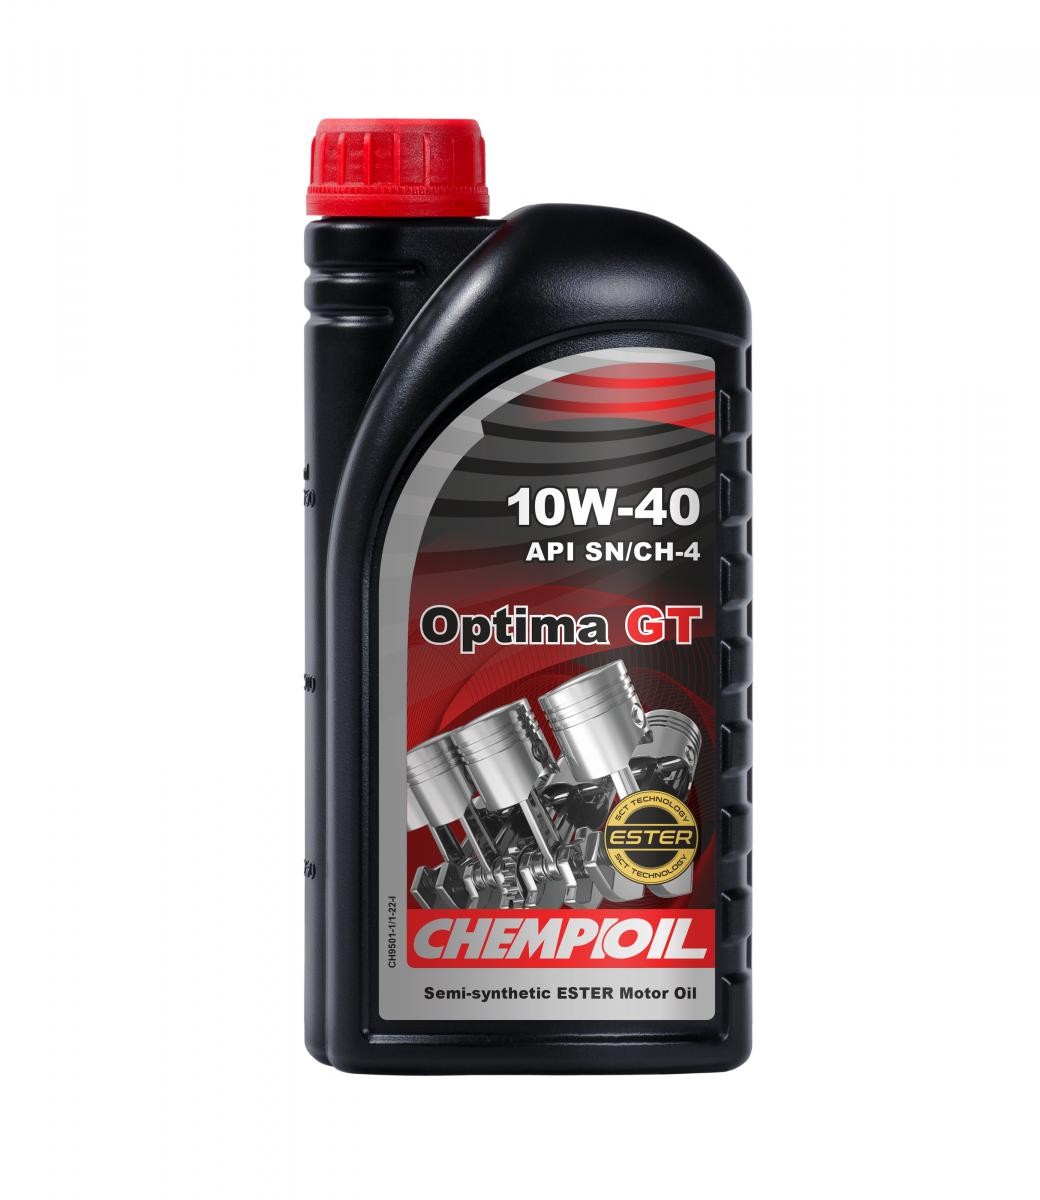 CHEMPIOIL Optima, GT CH9501-1 Moottoriöljy 10W-40, 1l, Osasynteettinen öljy